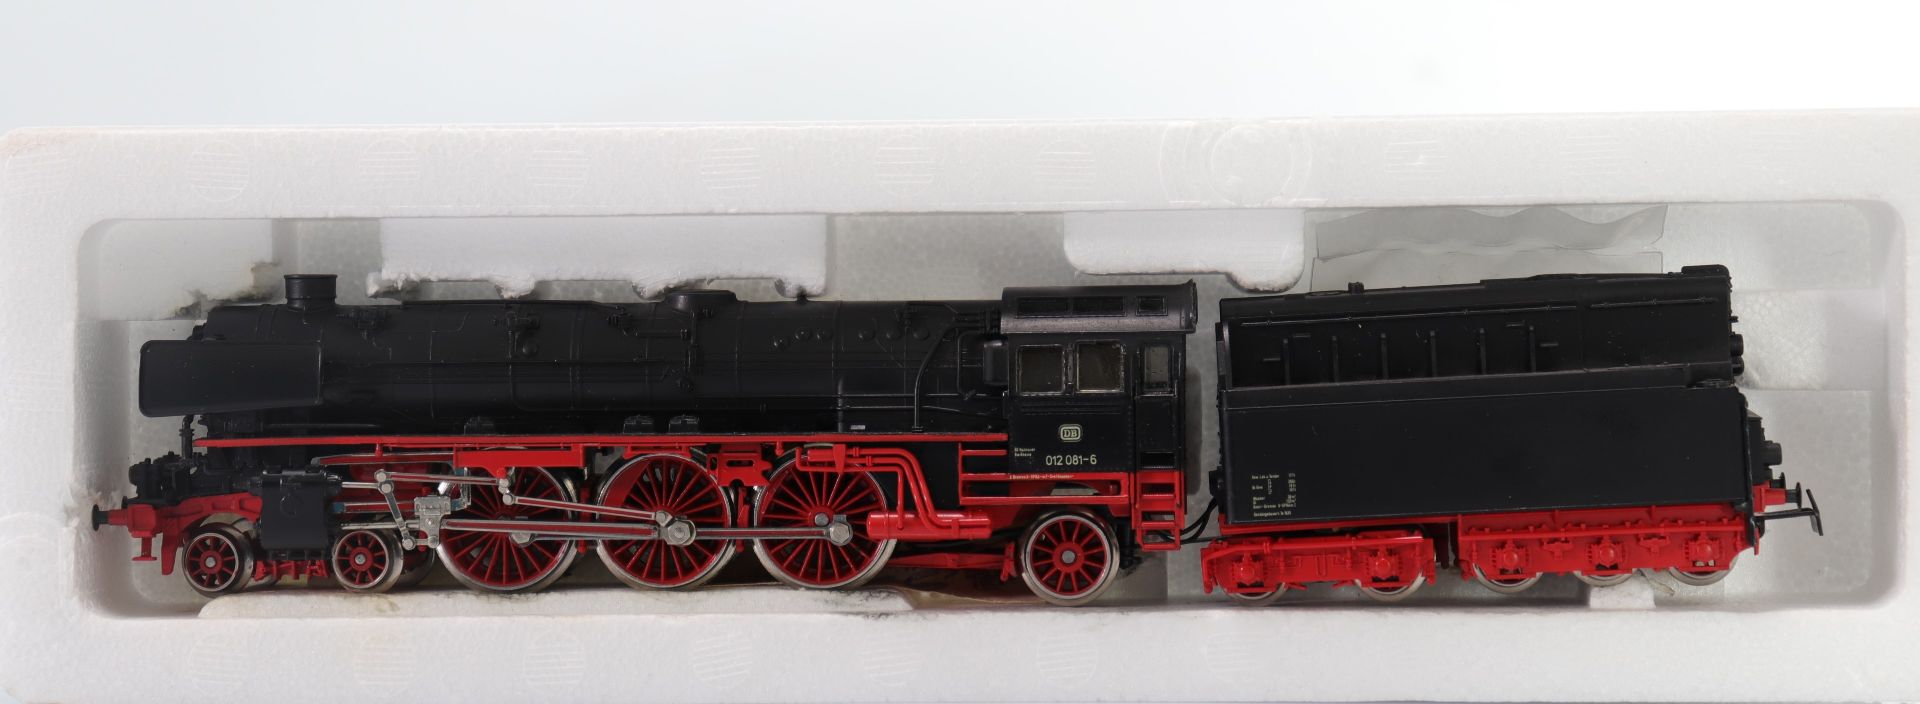 Marklin locomotive / Reference: 8385 / Type: Steam loco 4-6-2 #012081-6